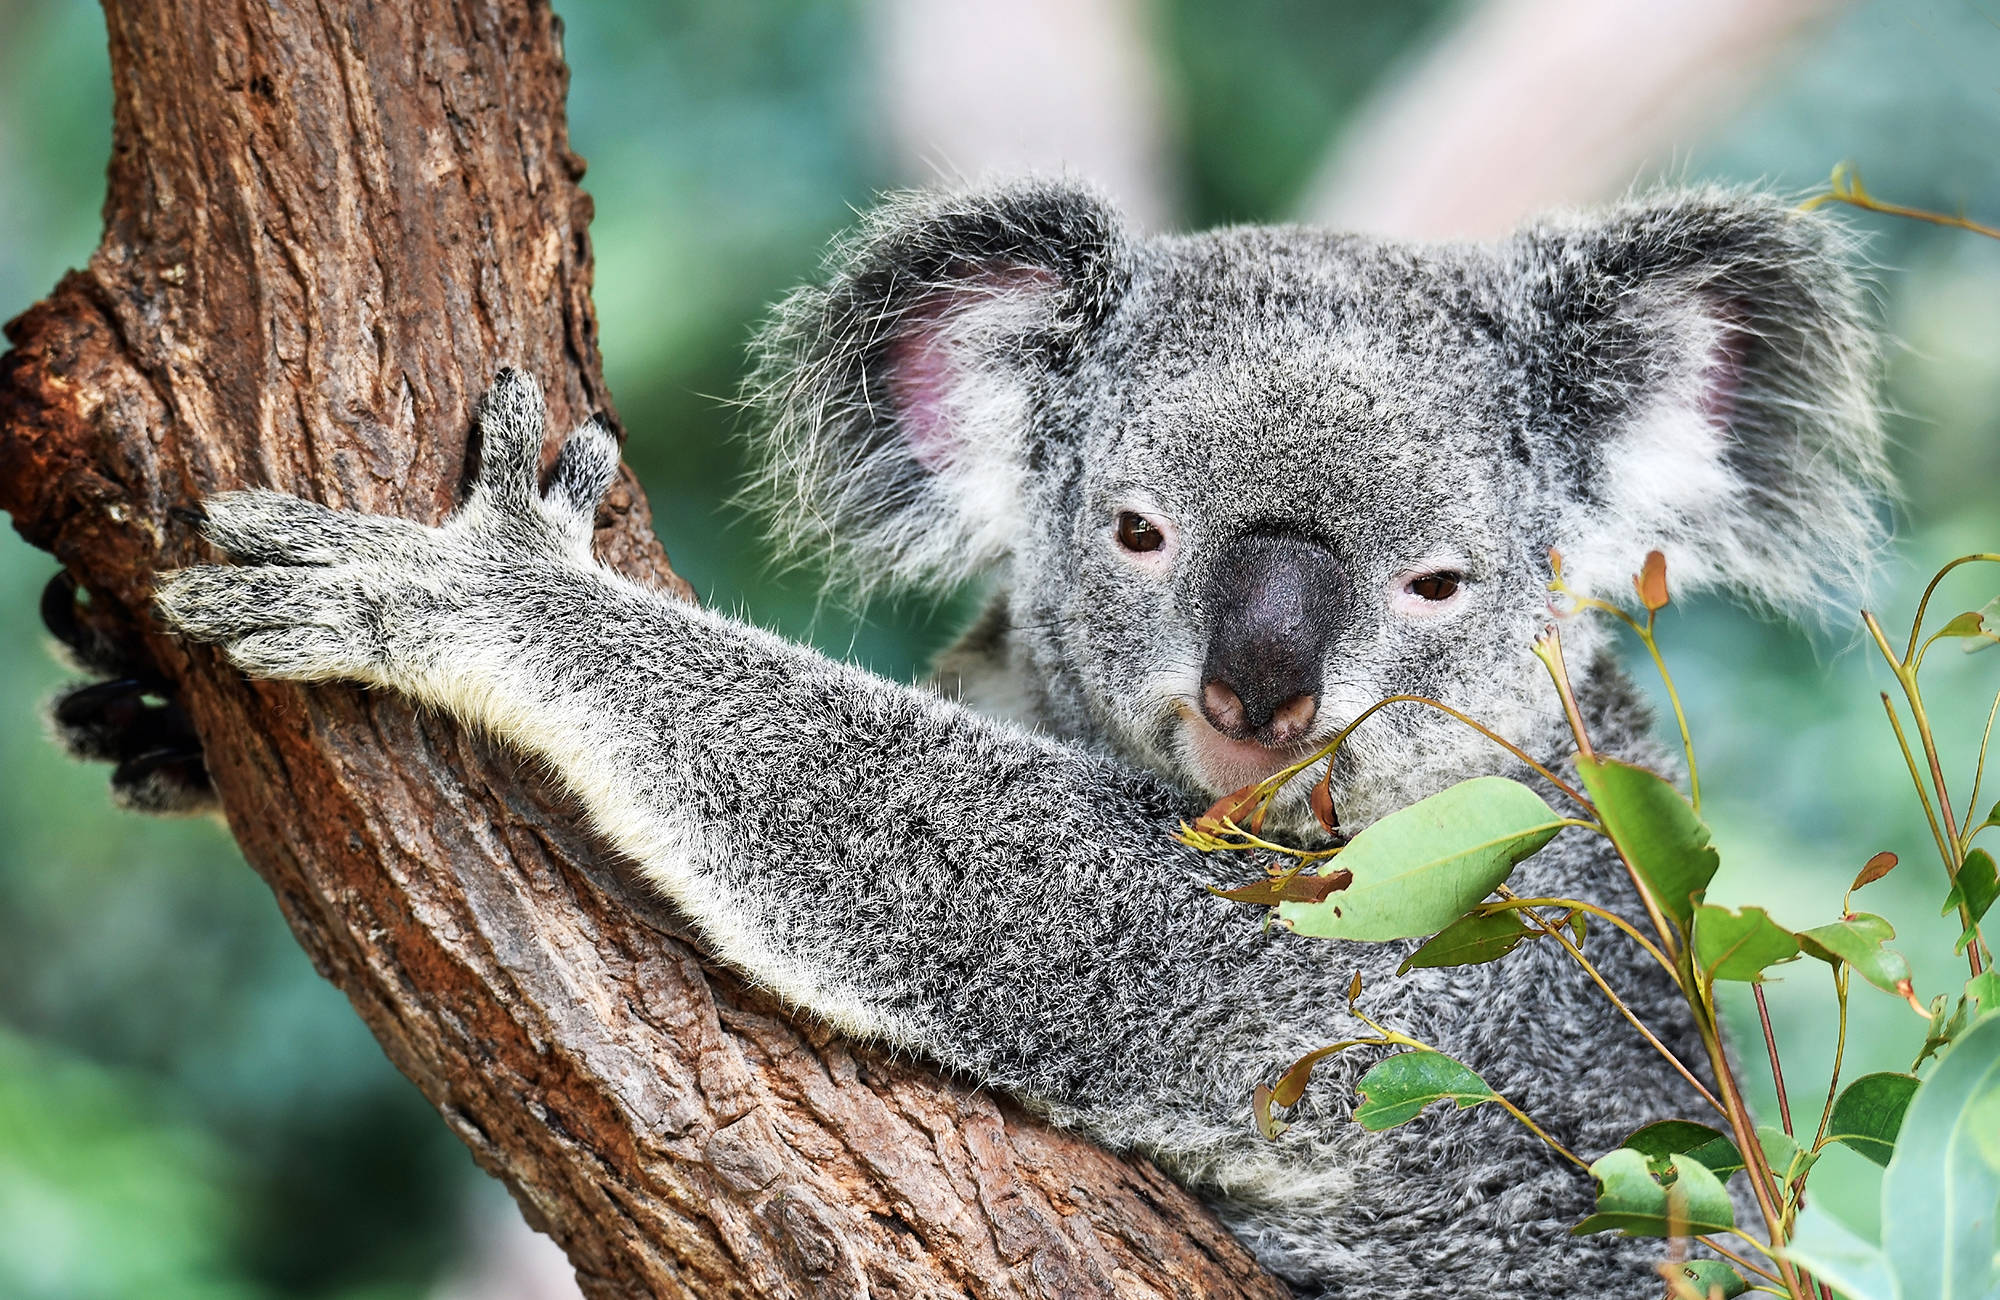 australia-koala-cover